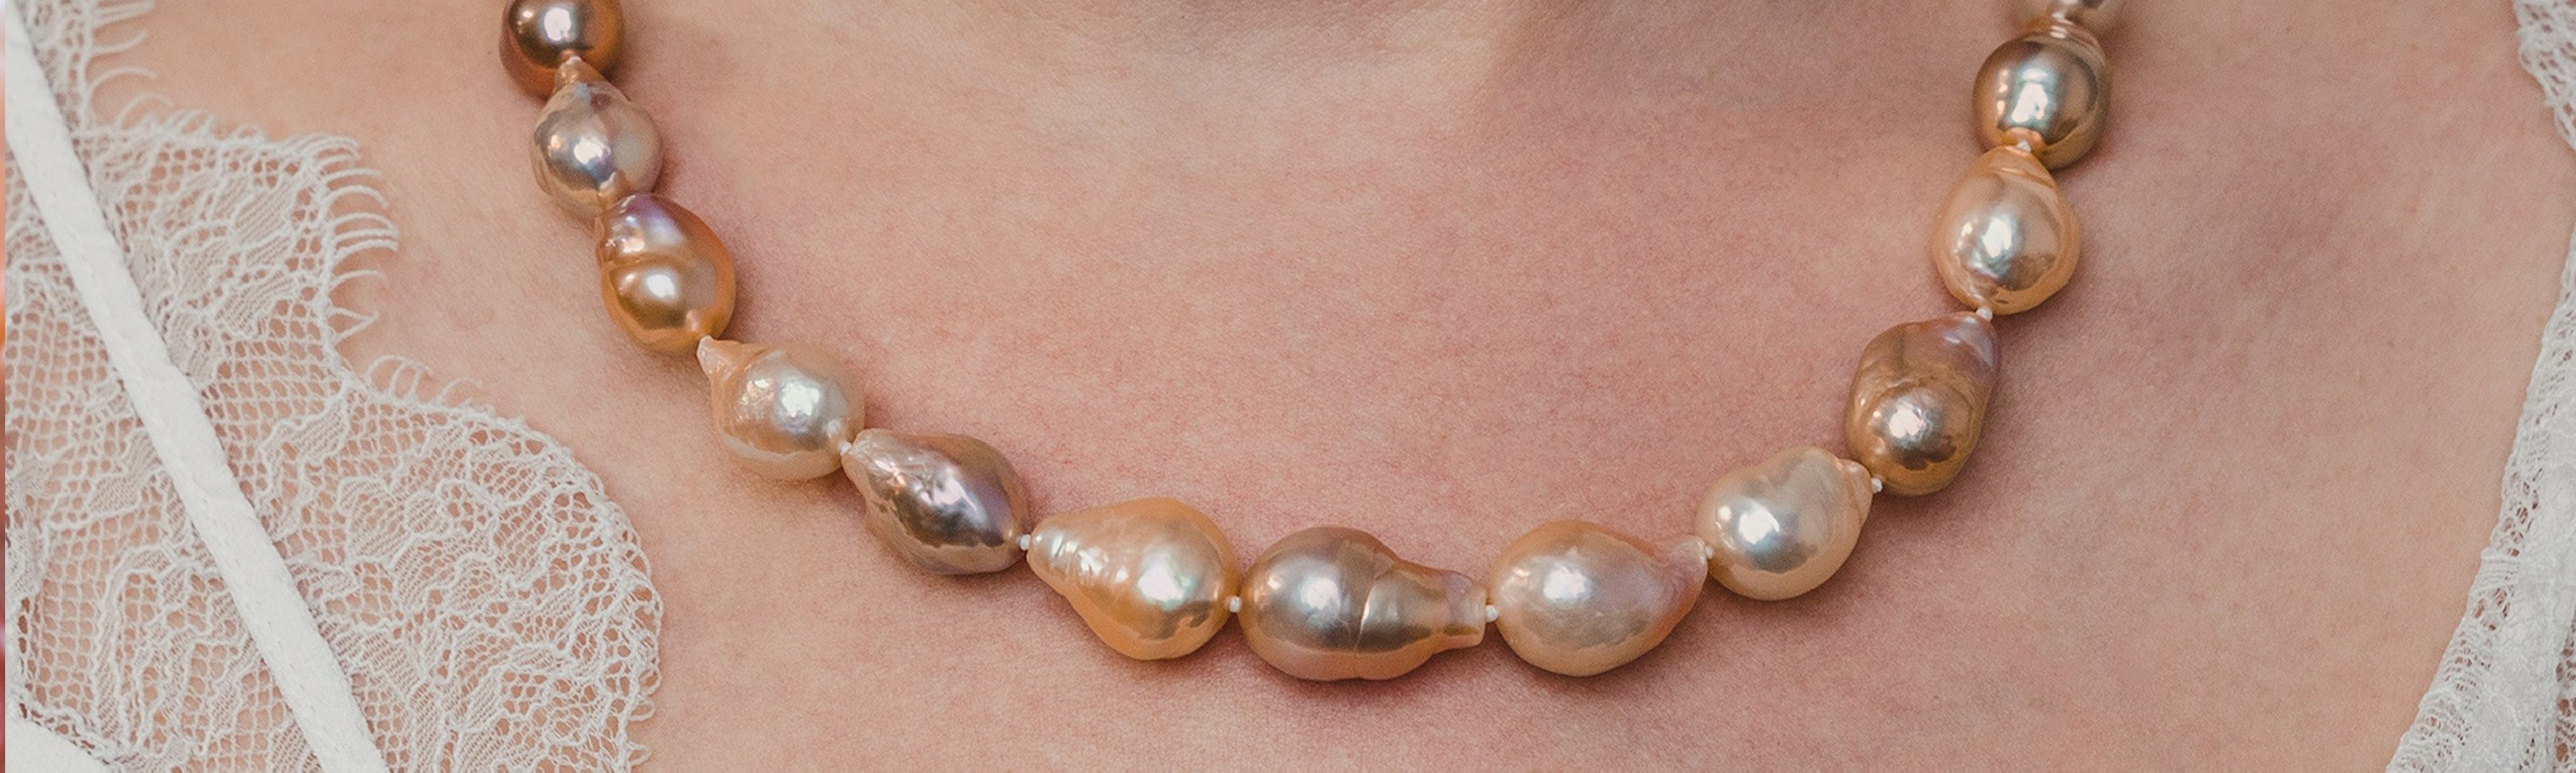 Perlas Edison, las perlas más vanguardistas.